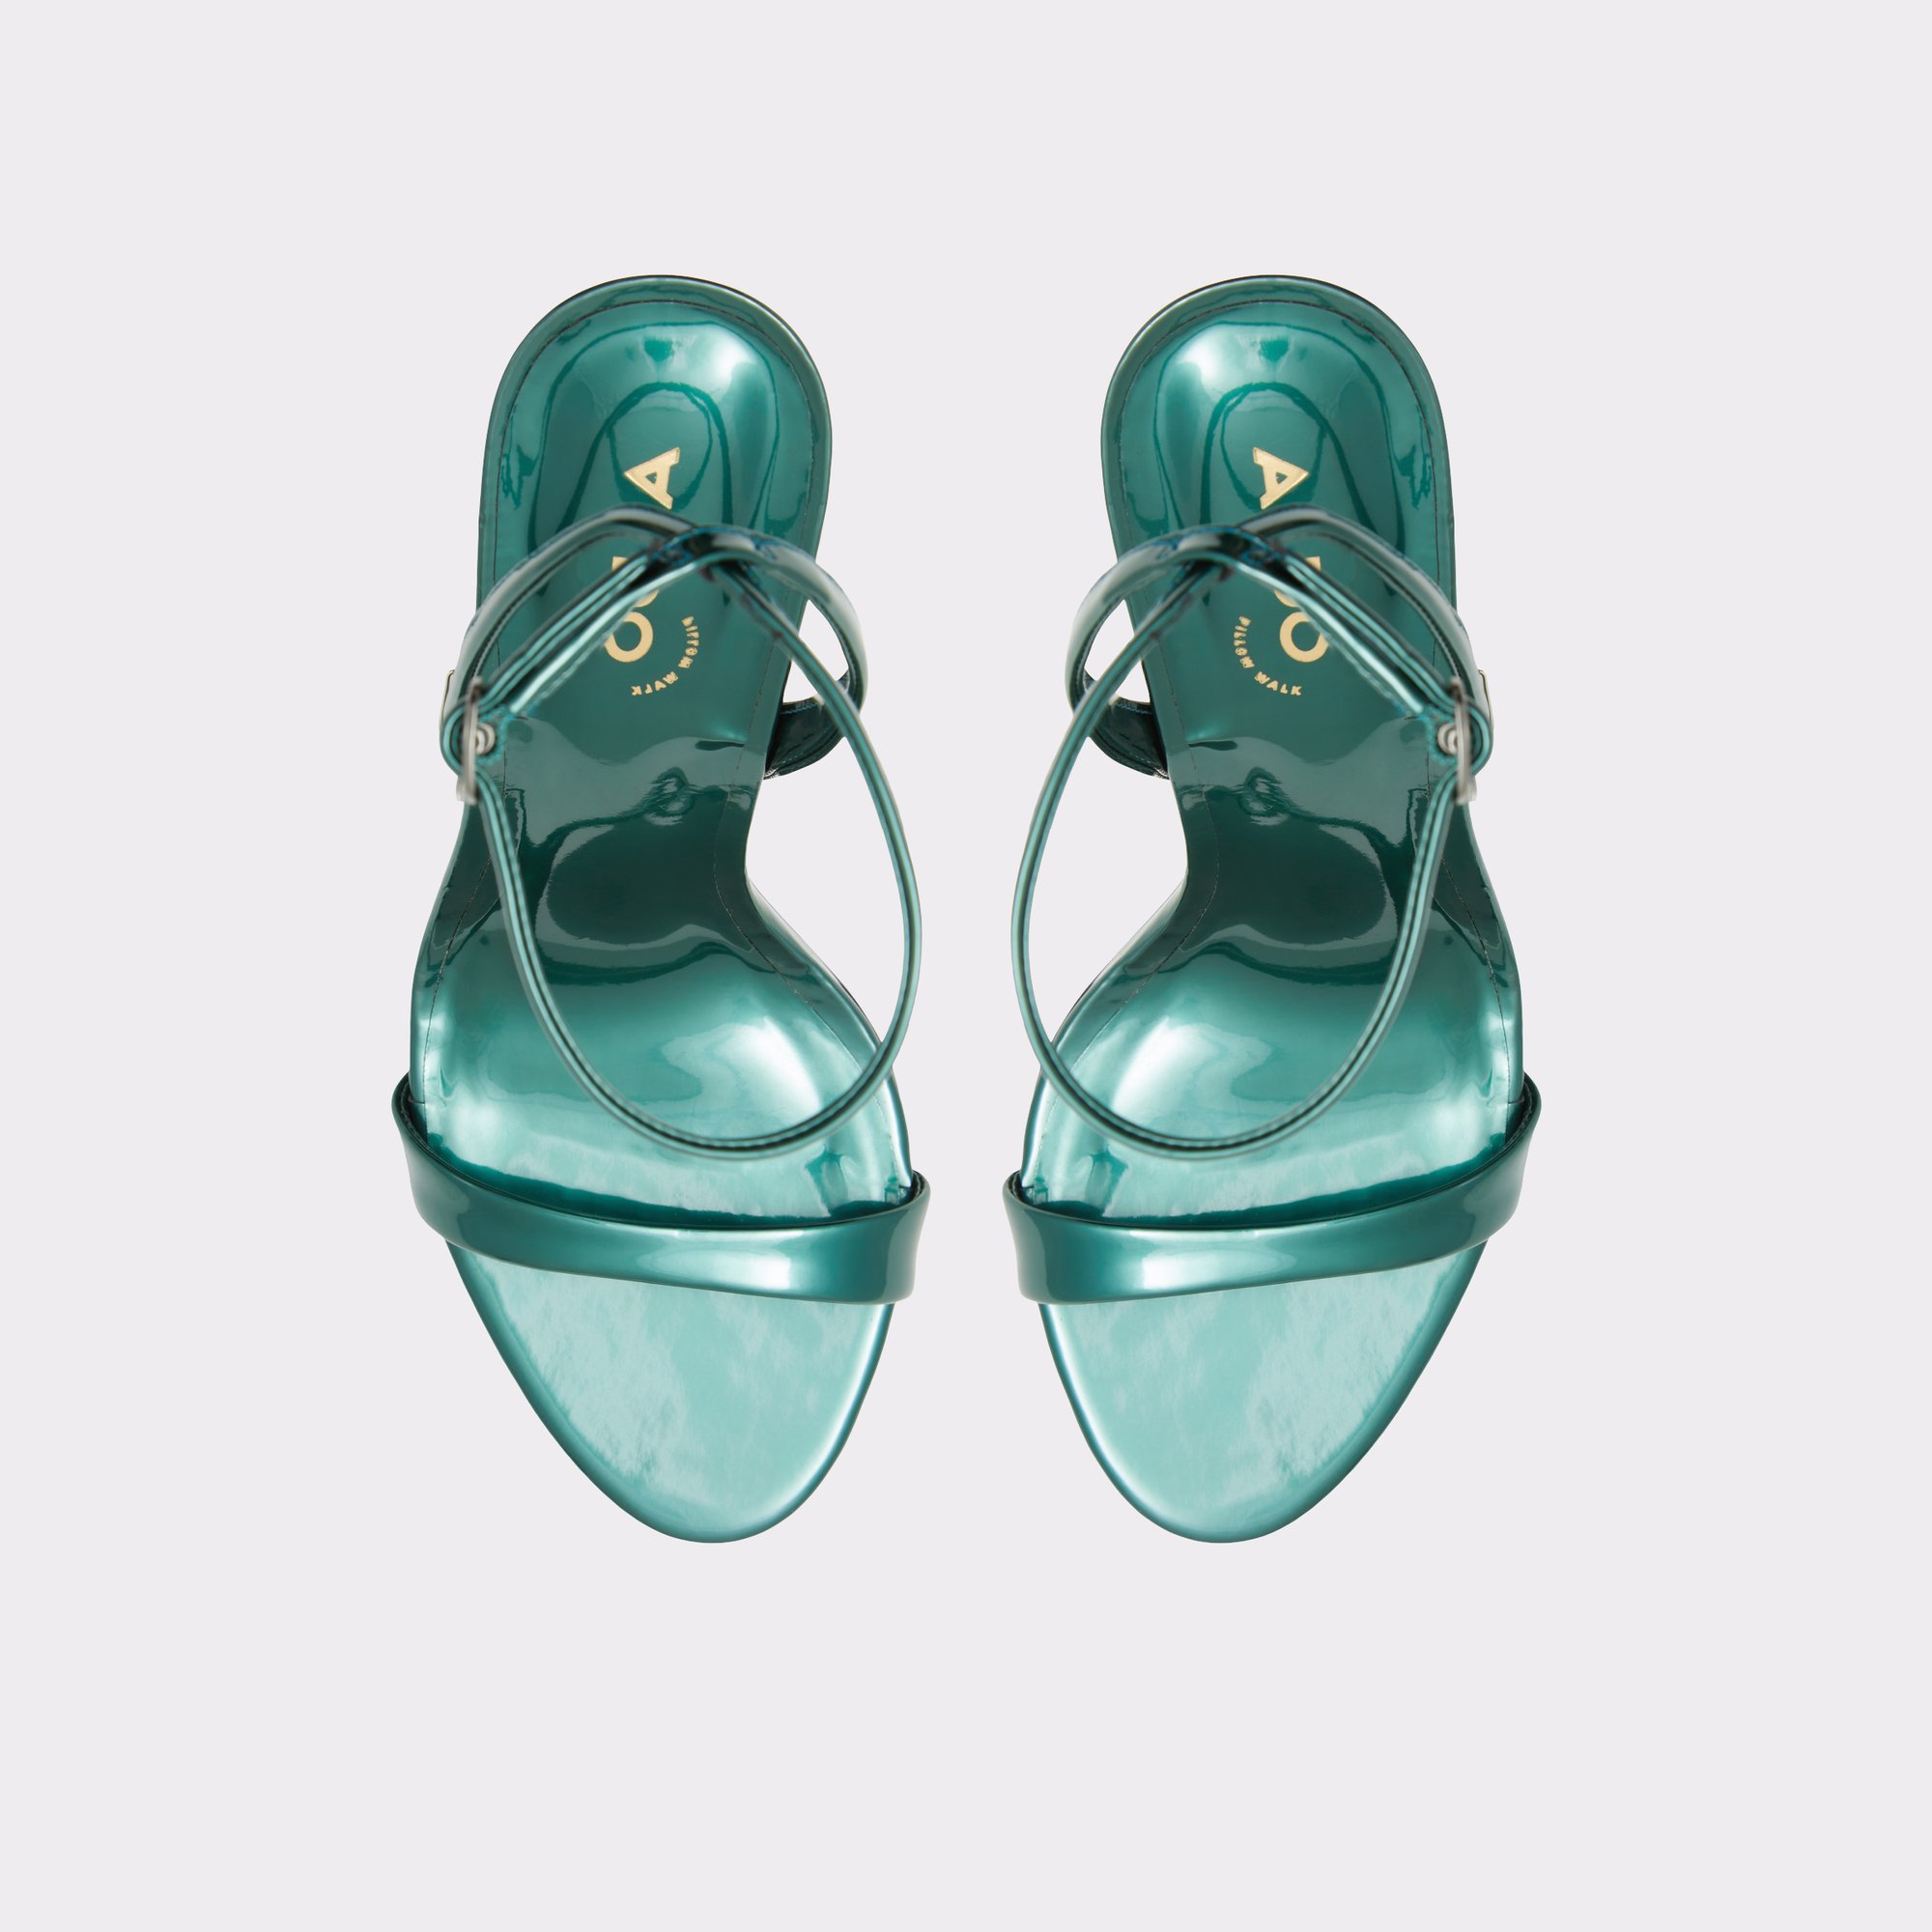 Lydala Other Green Women's Heeled sandals | ALDO Canada